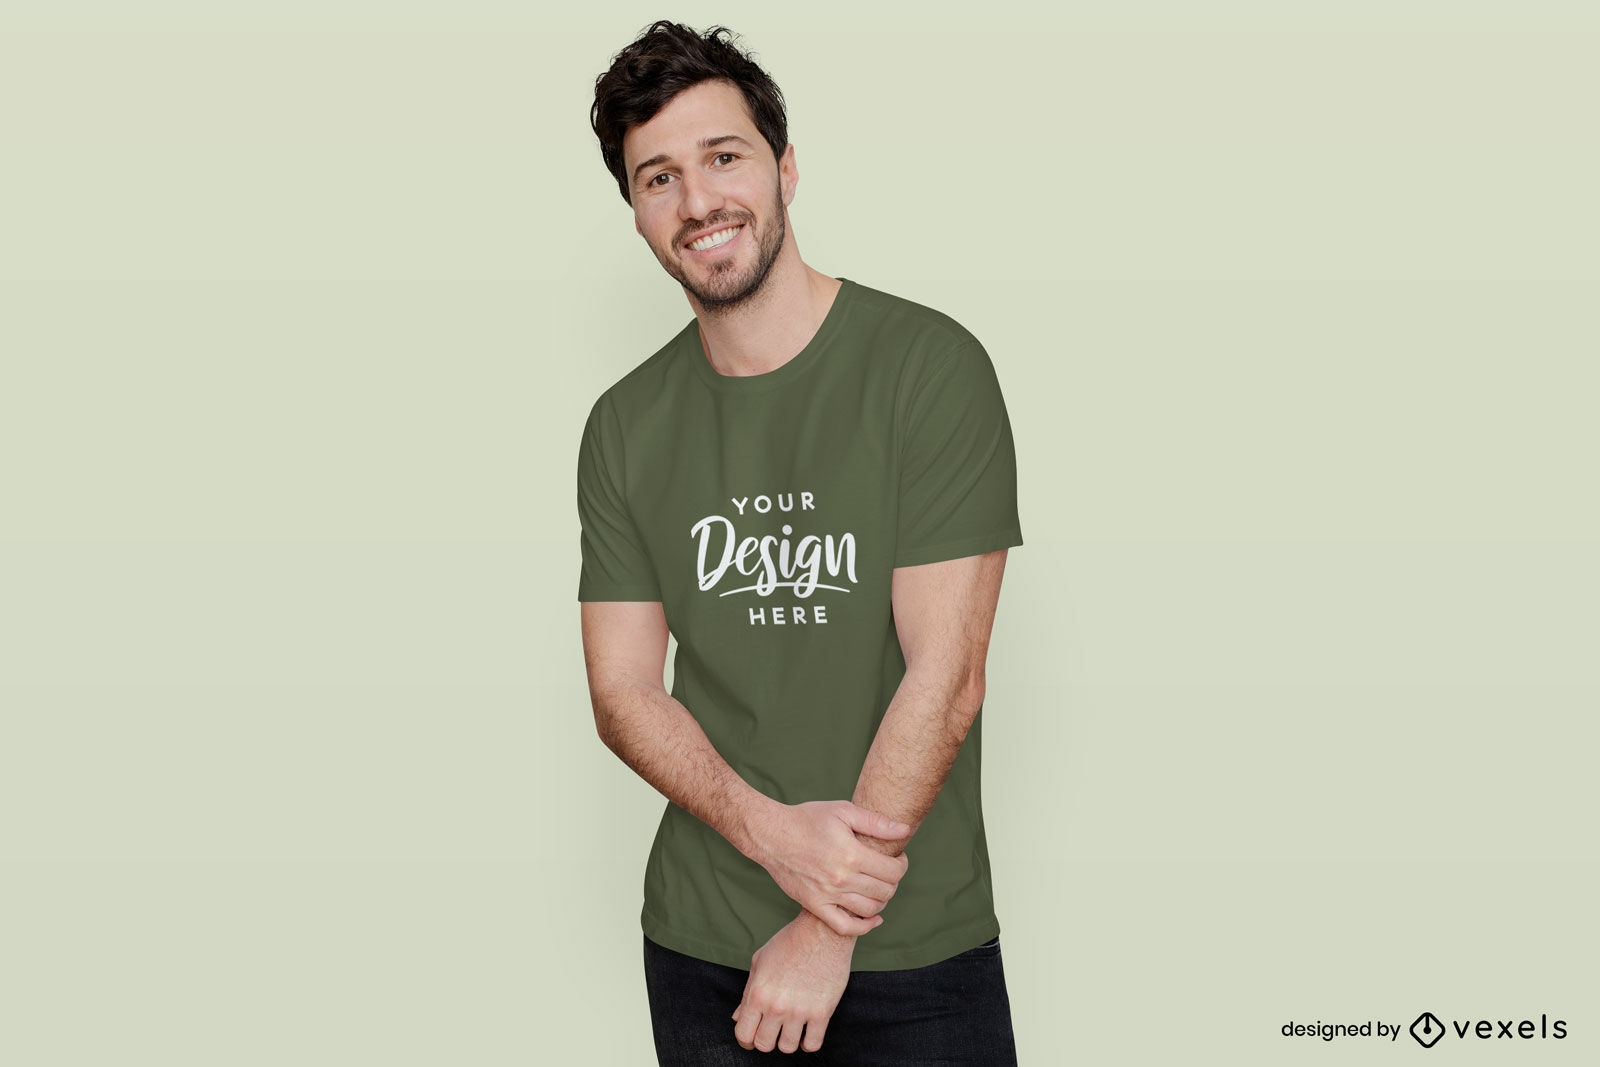 Mann im grünen T-Shirt mit flachem Hintergrundmodell